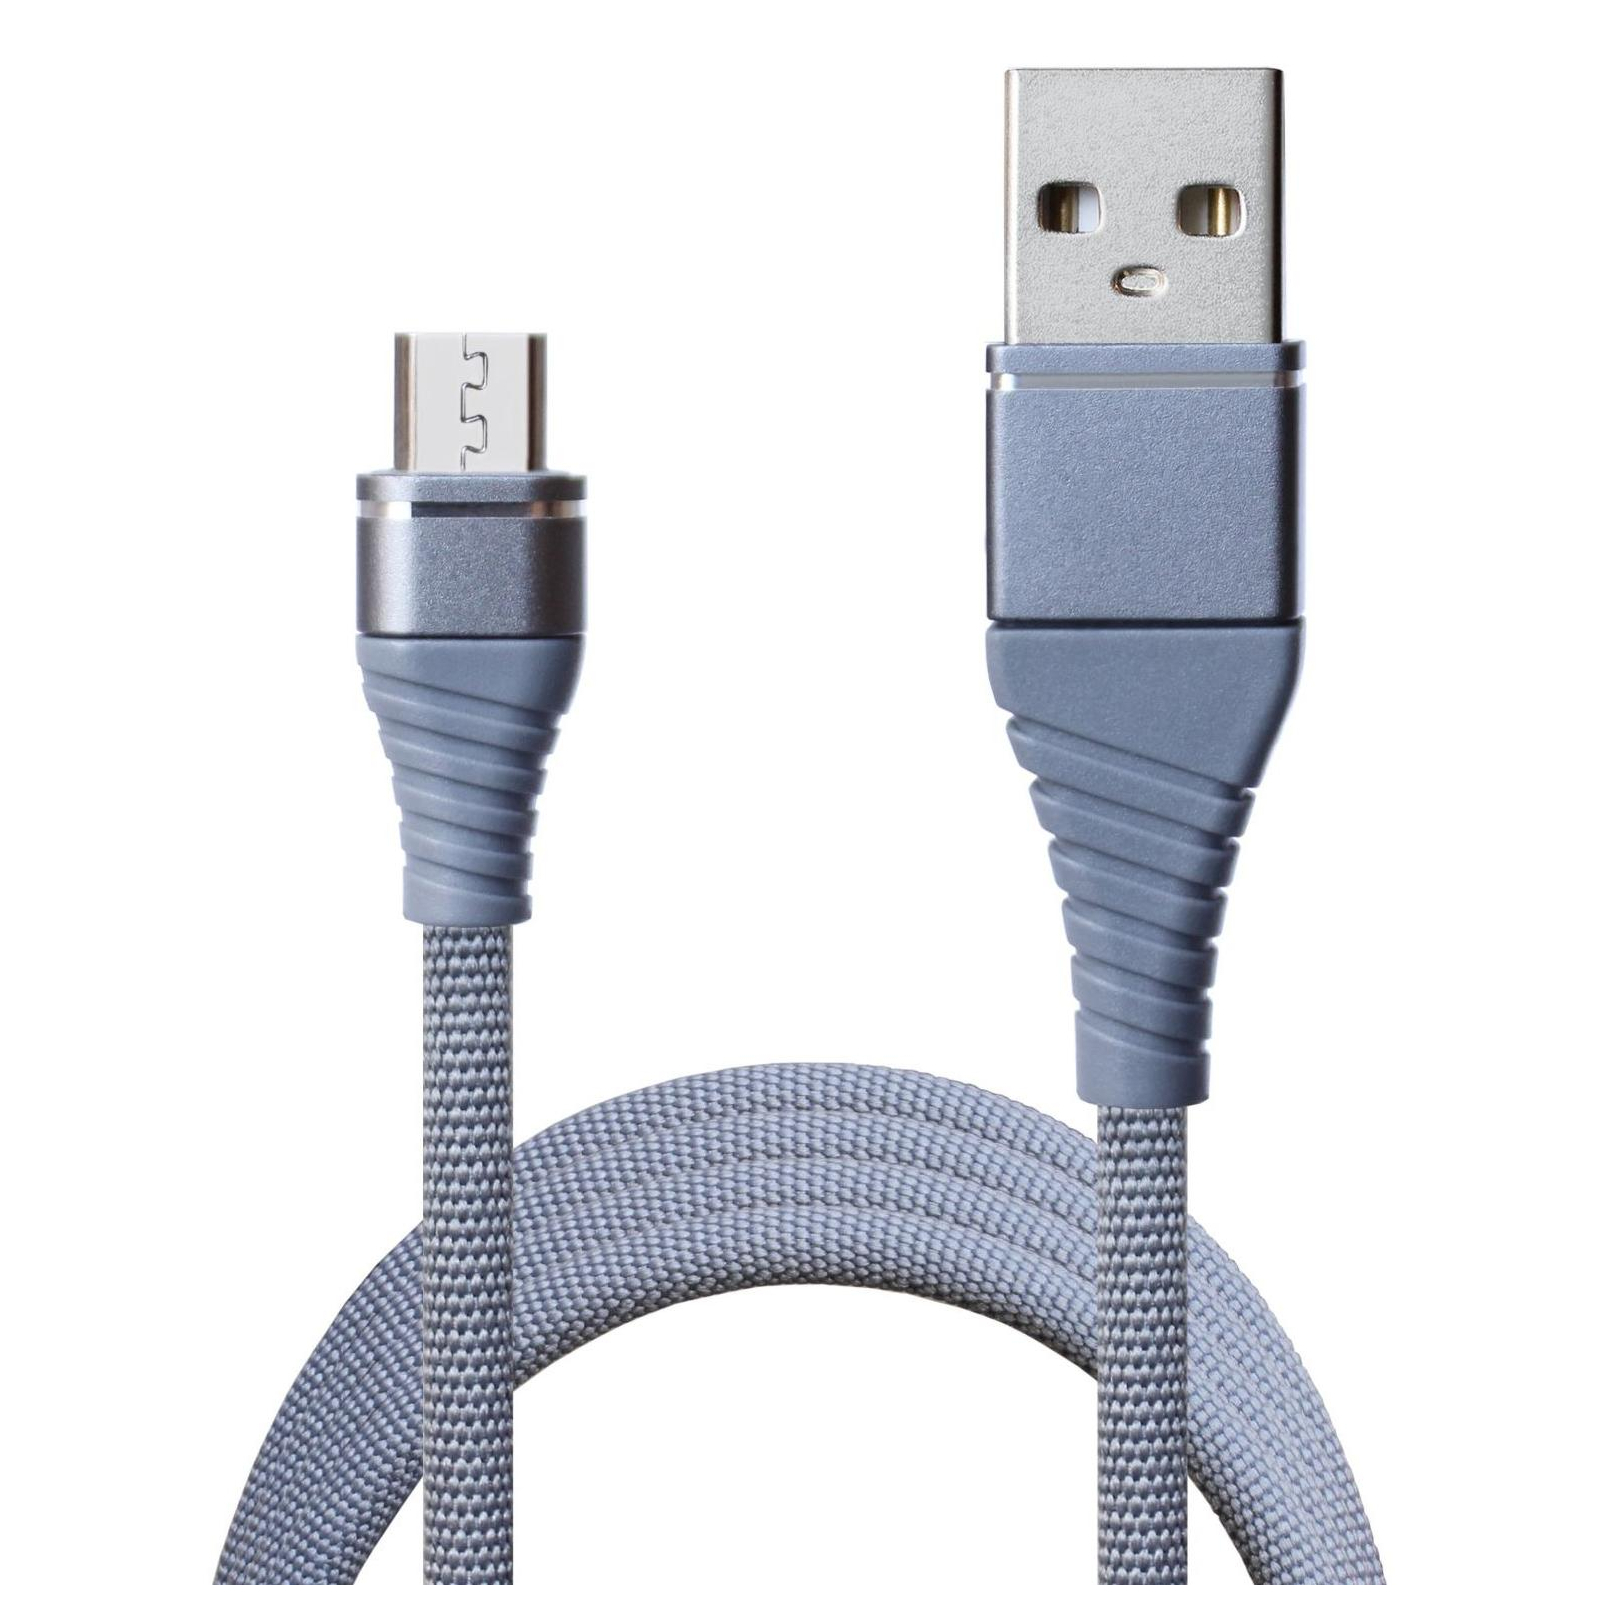 Дата кабель USB 2.0 AM to Micro 5P 1.2m 2A Black Grand-X (NM012BK)